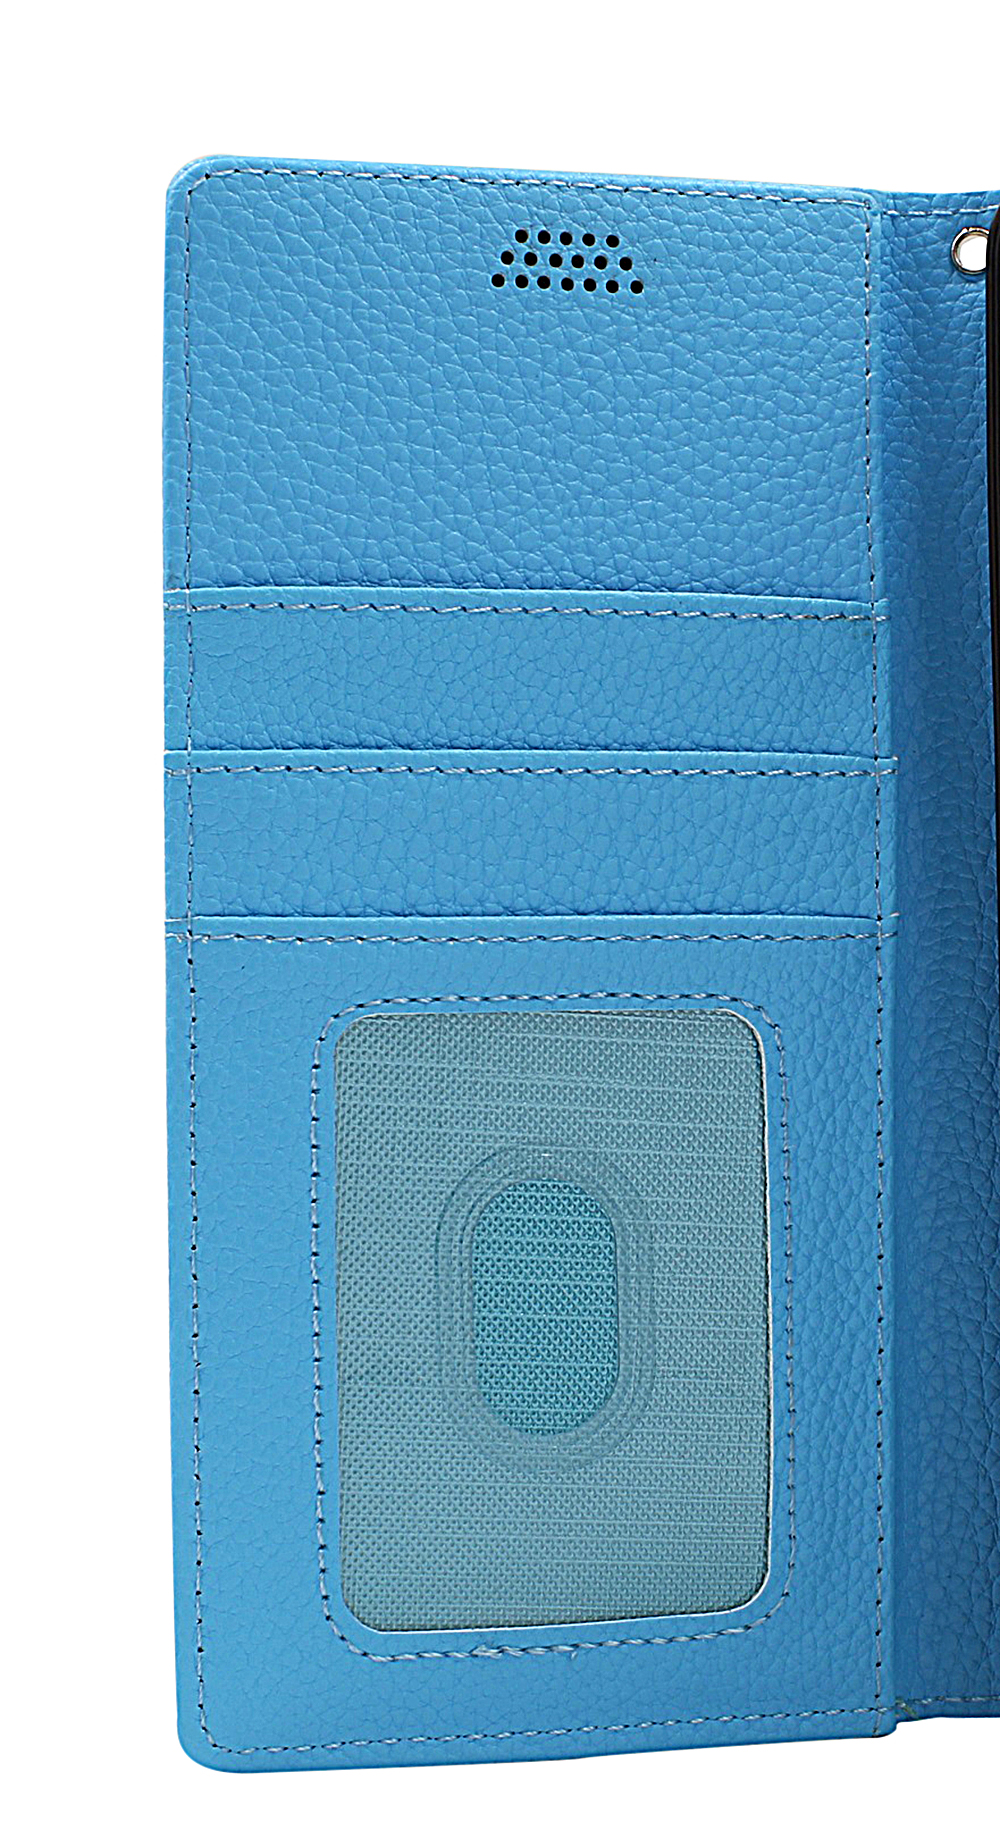 New Standcase Wallet Motorola Moto E5 Plus / Moto E Plus (5th gen)